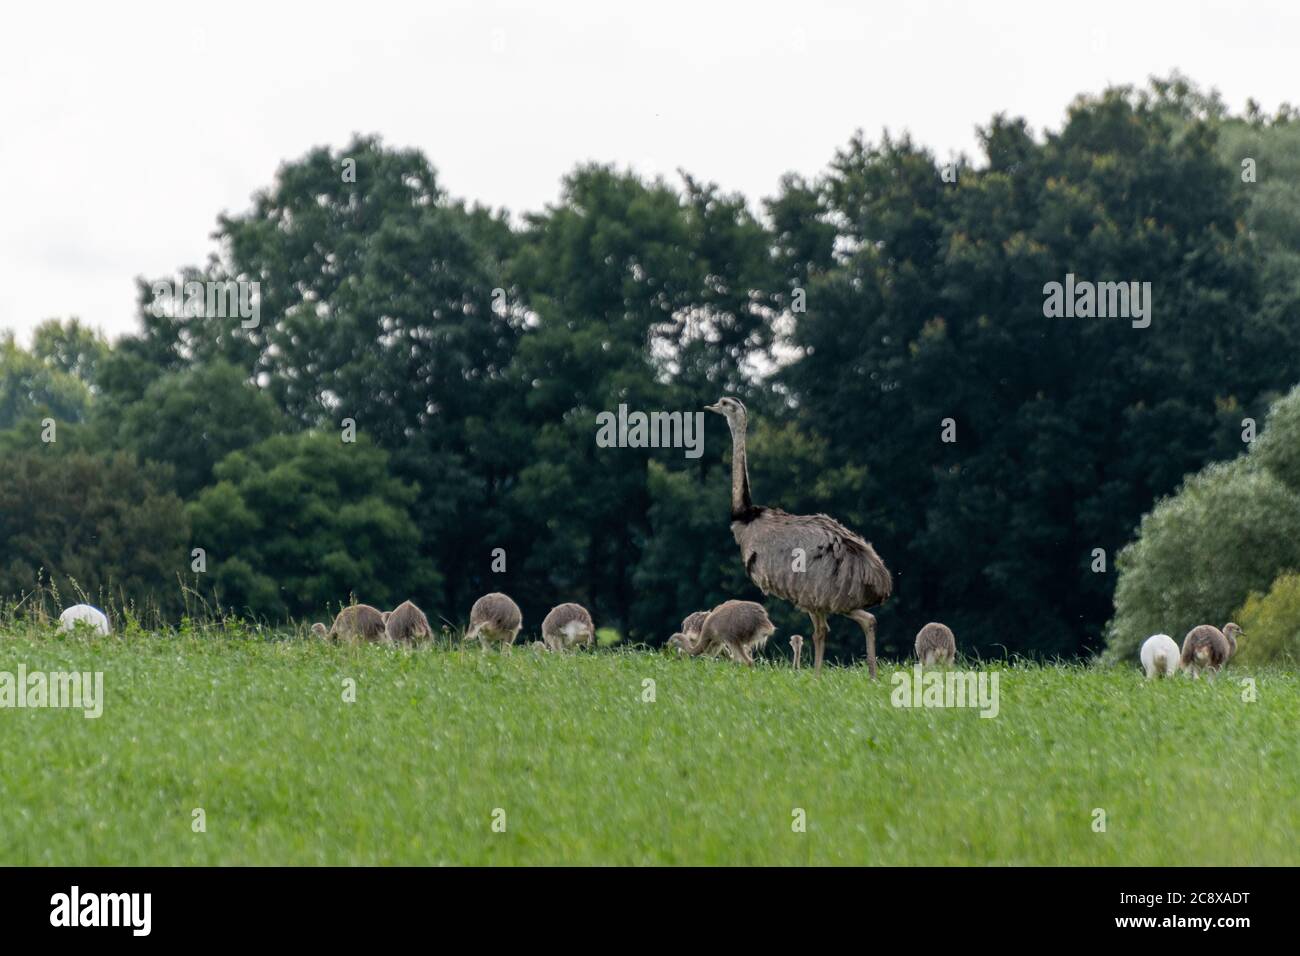 Wild Nandus with children on a field in Mecklenburg West Pomerania Stock Photo